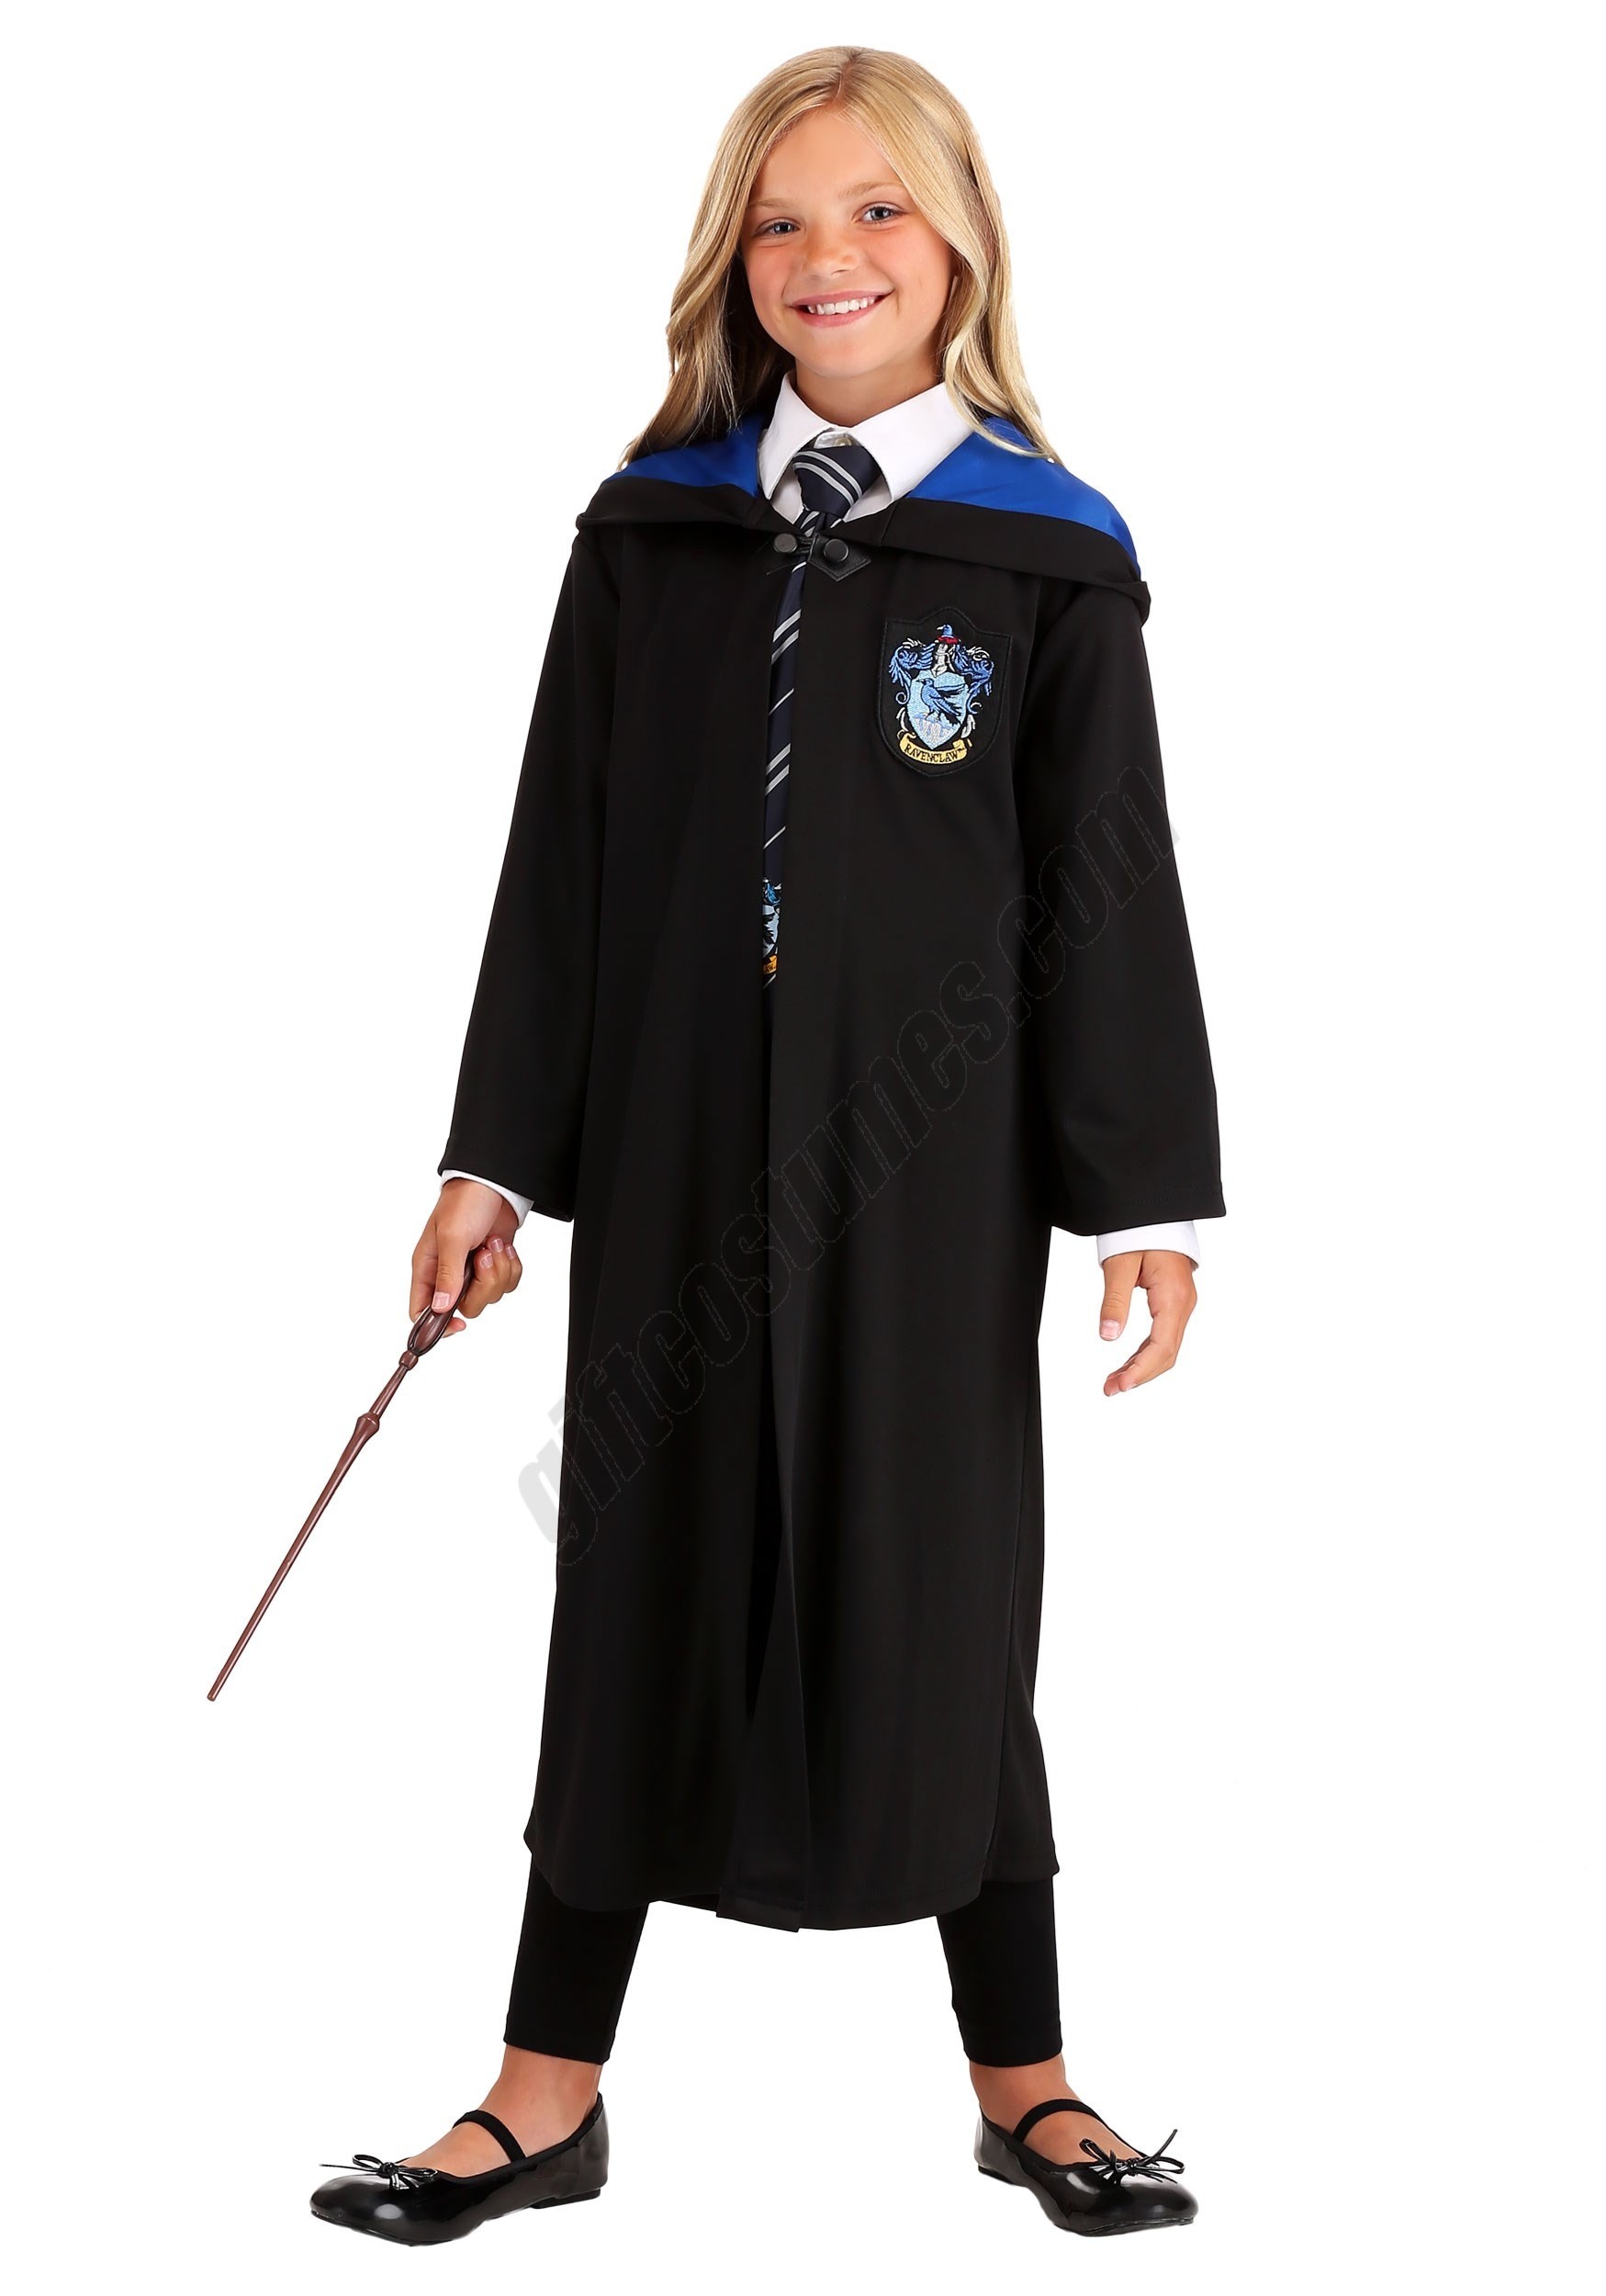 Kids Harry Potter Ravenclaw Robe Costume Promotions - Kids Harry Potter Ravenclaw Robe Costume Promotions